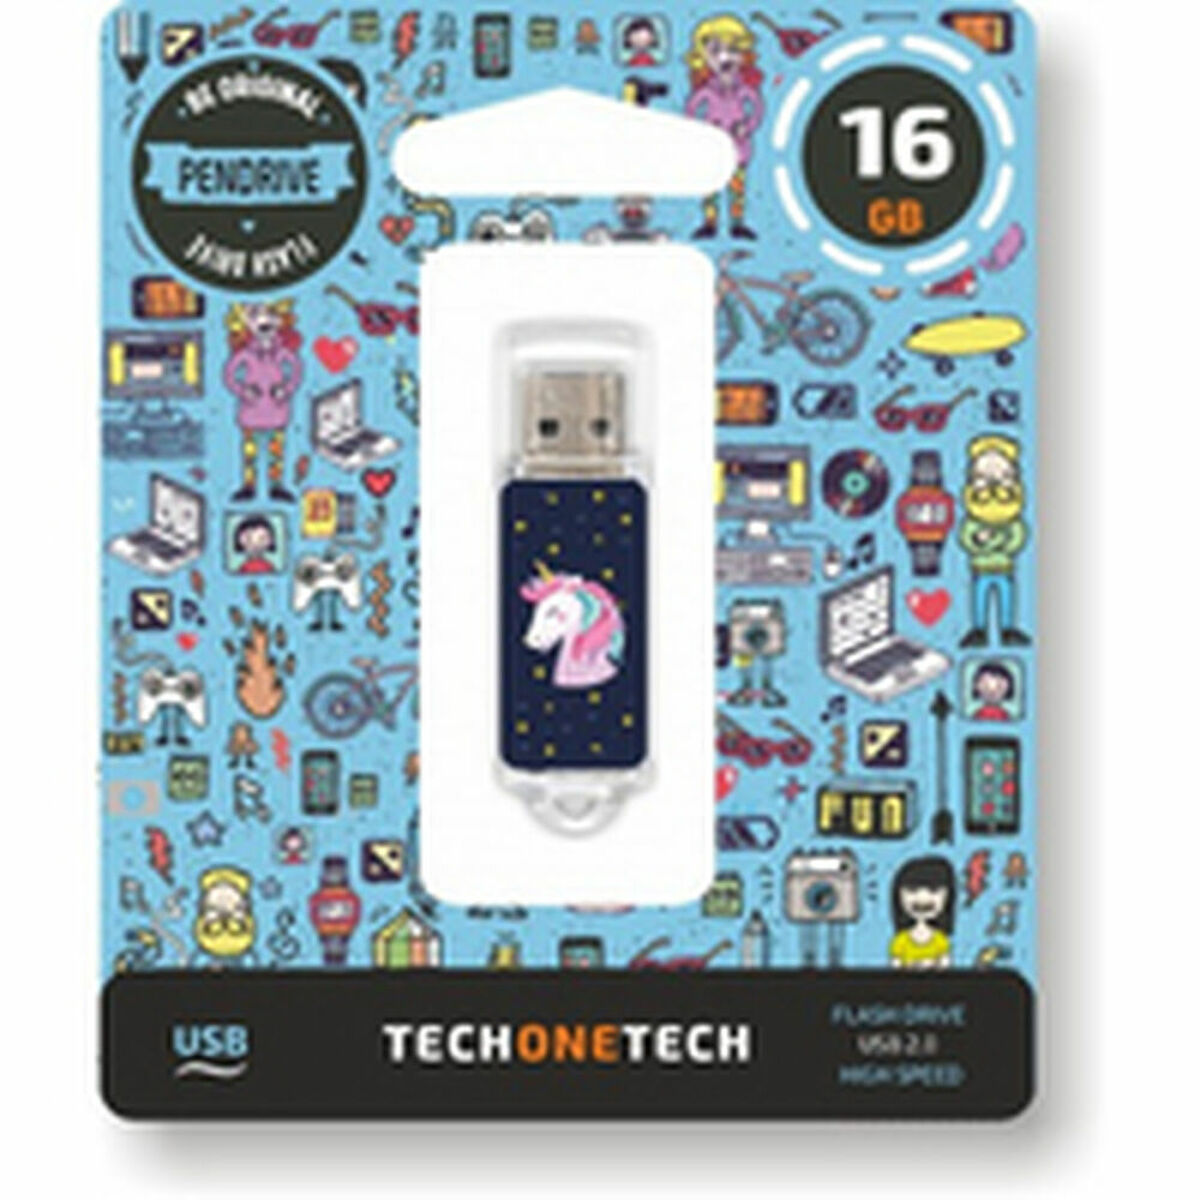 Clé USB Tech One Tech TEC4012-16 16 GB